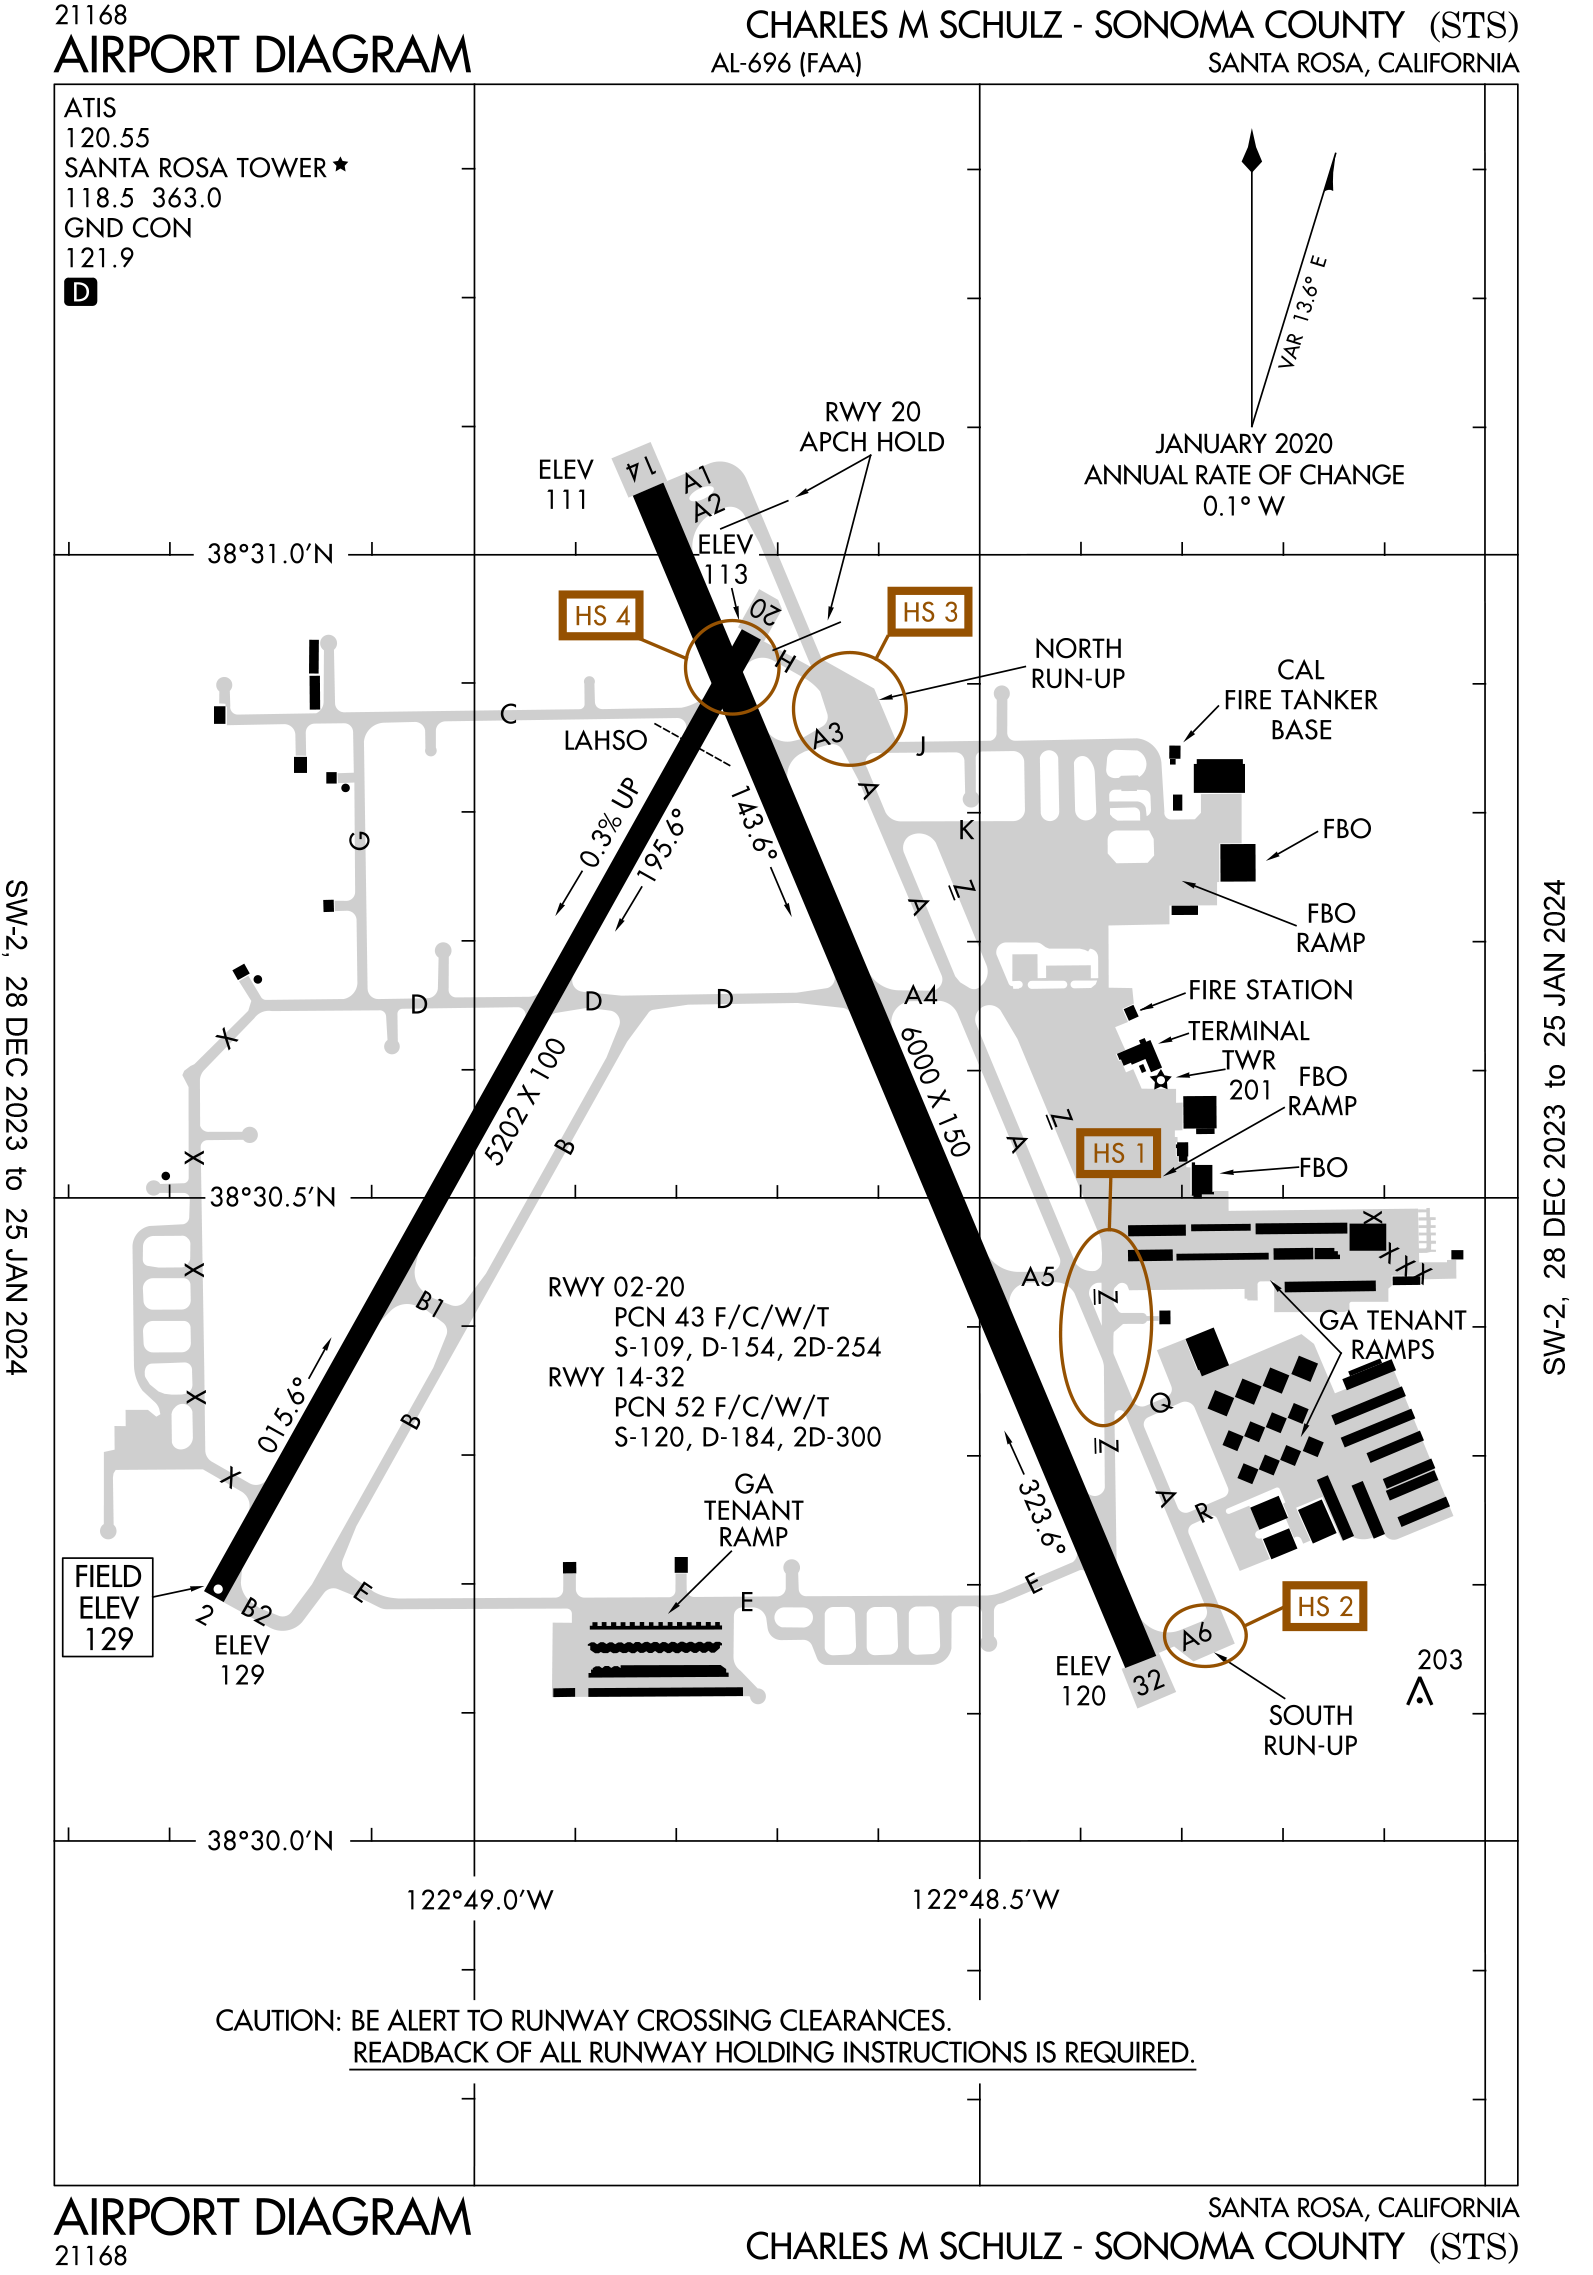 Airport Diagram of Charles M Schulz - Sonoma County Reginal Airport.